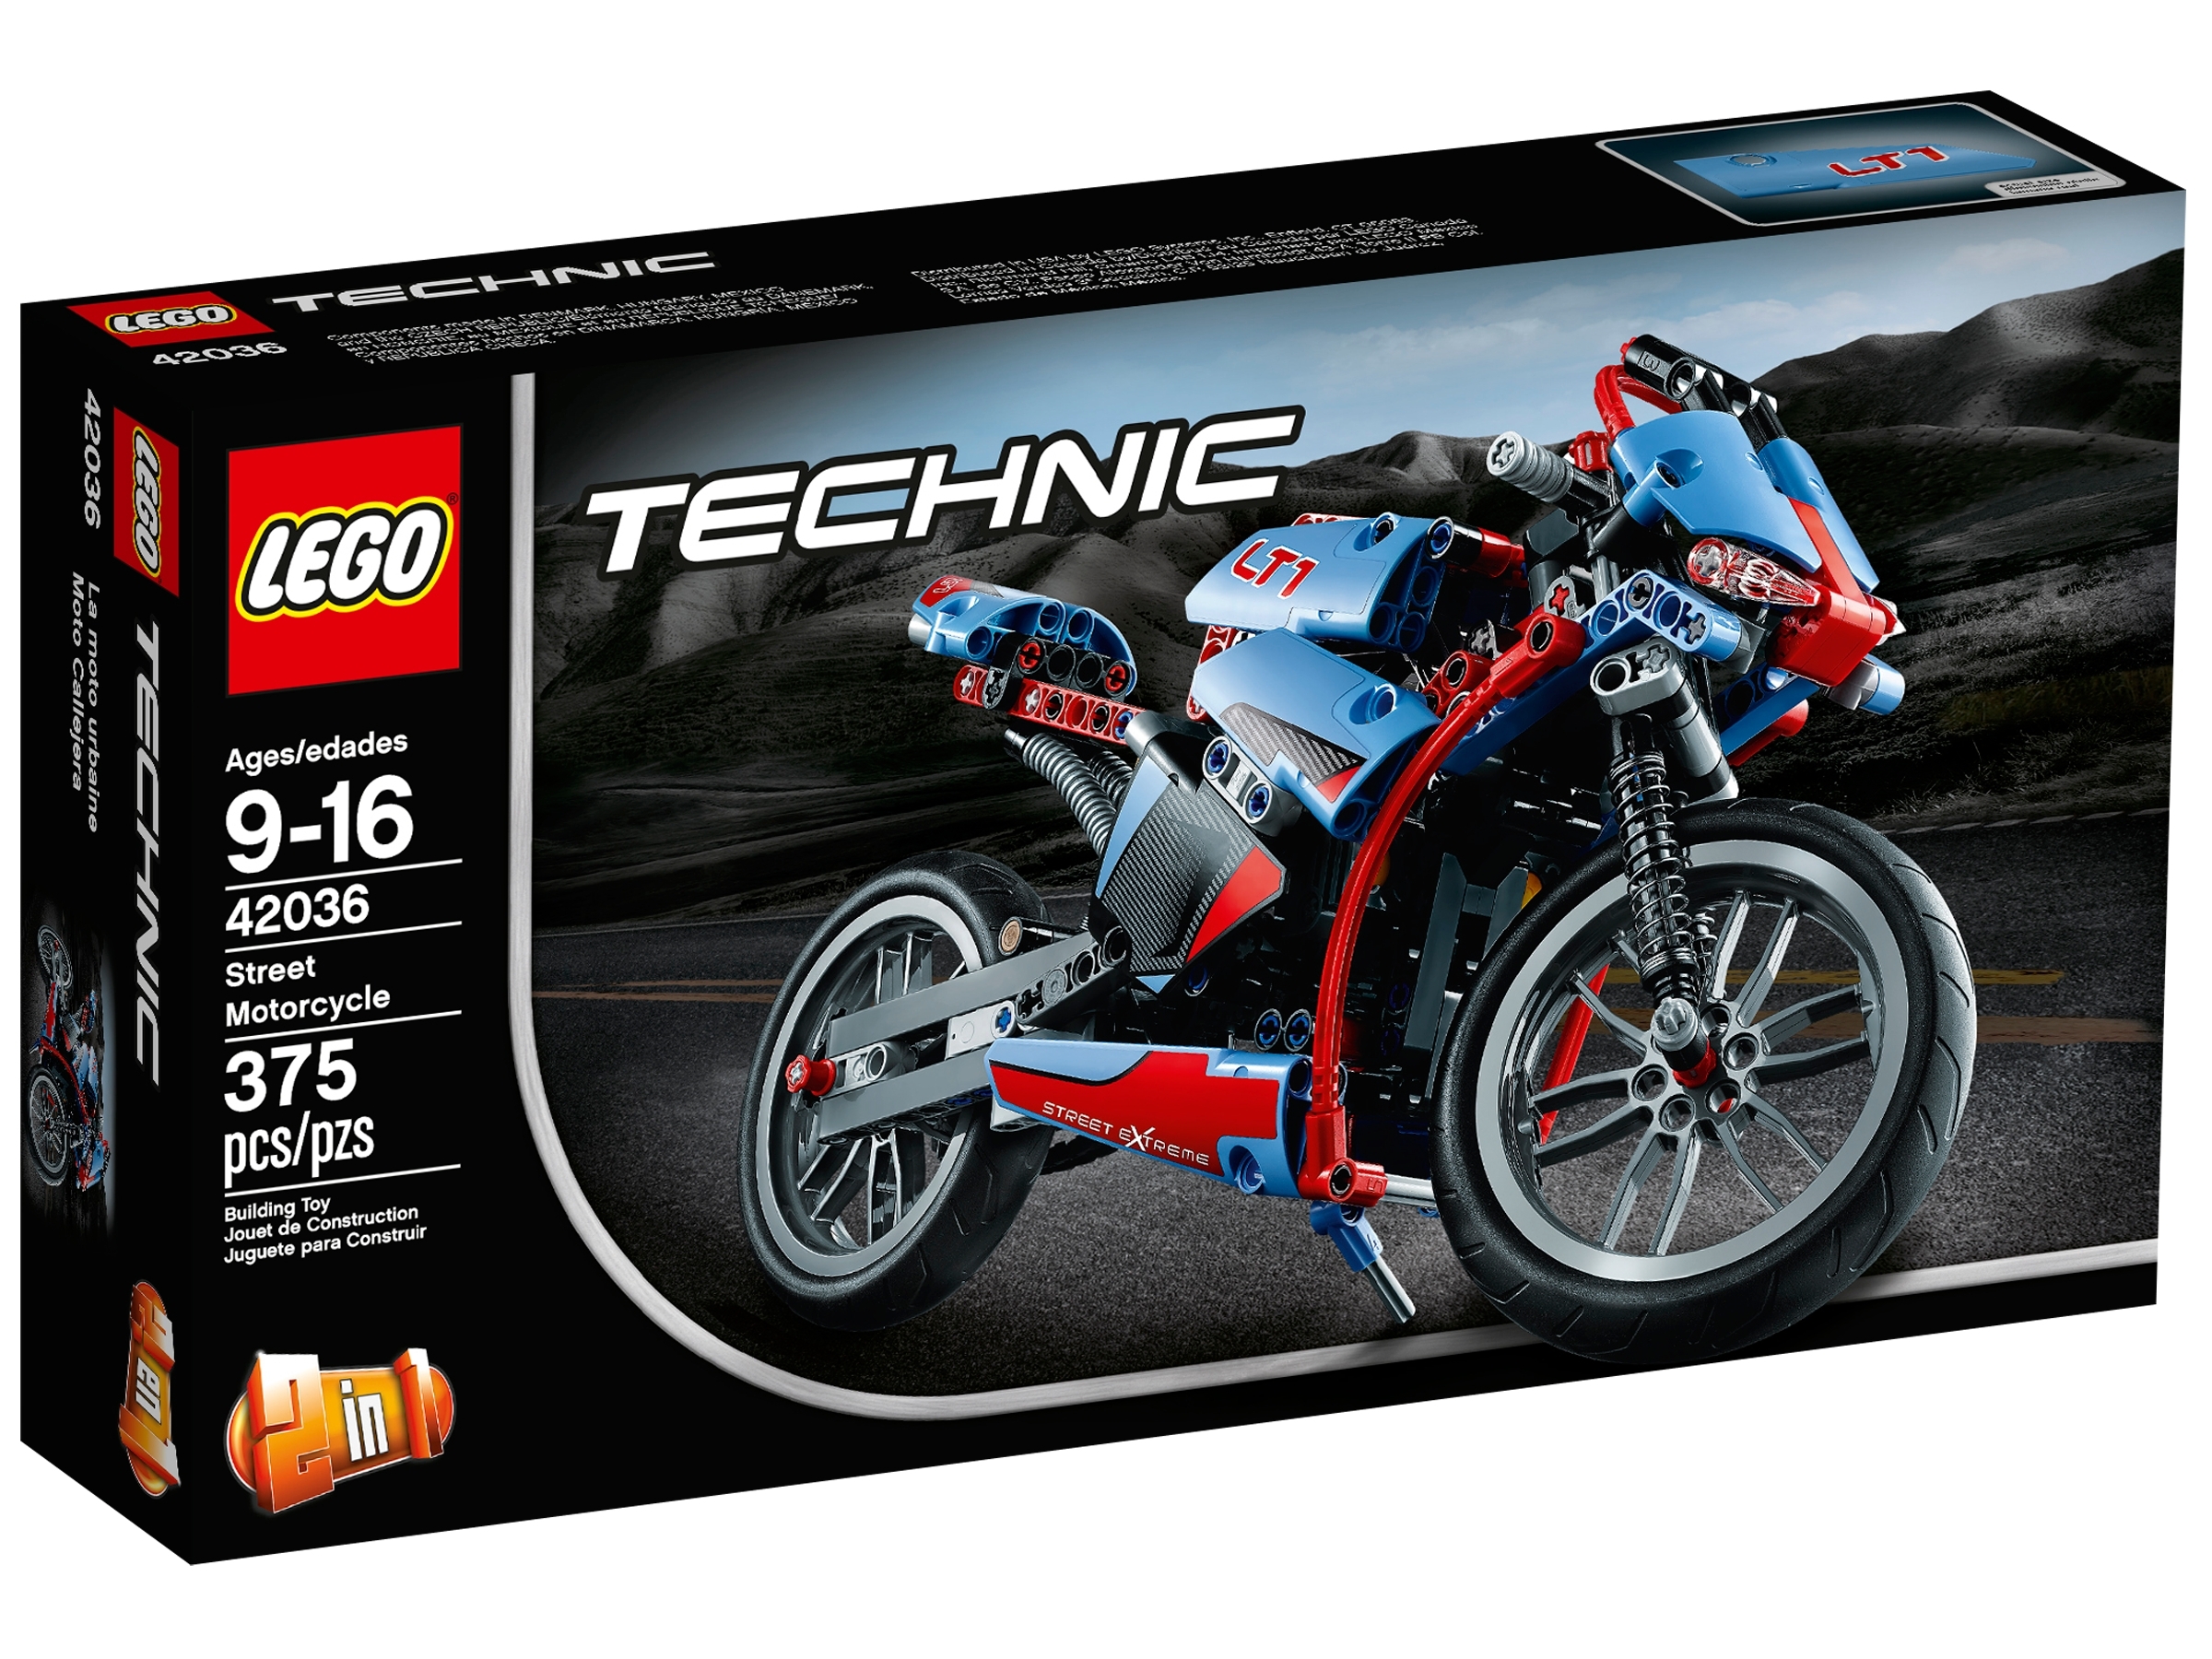 Street Motorcycle 42036, Technic